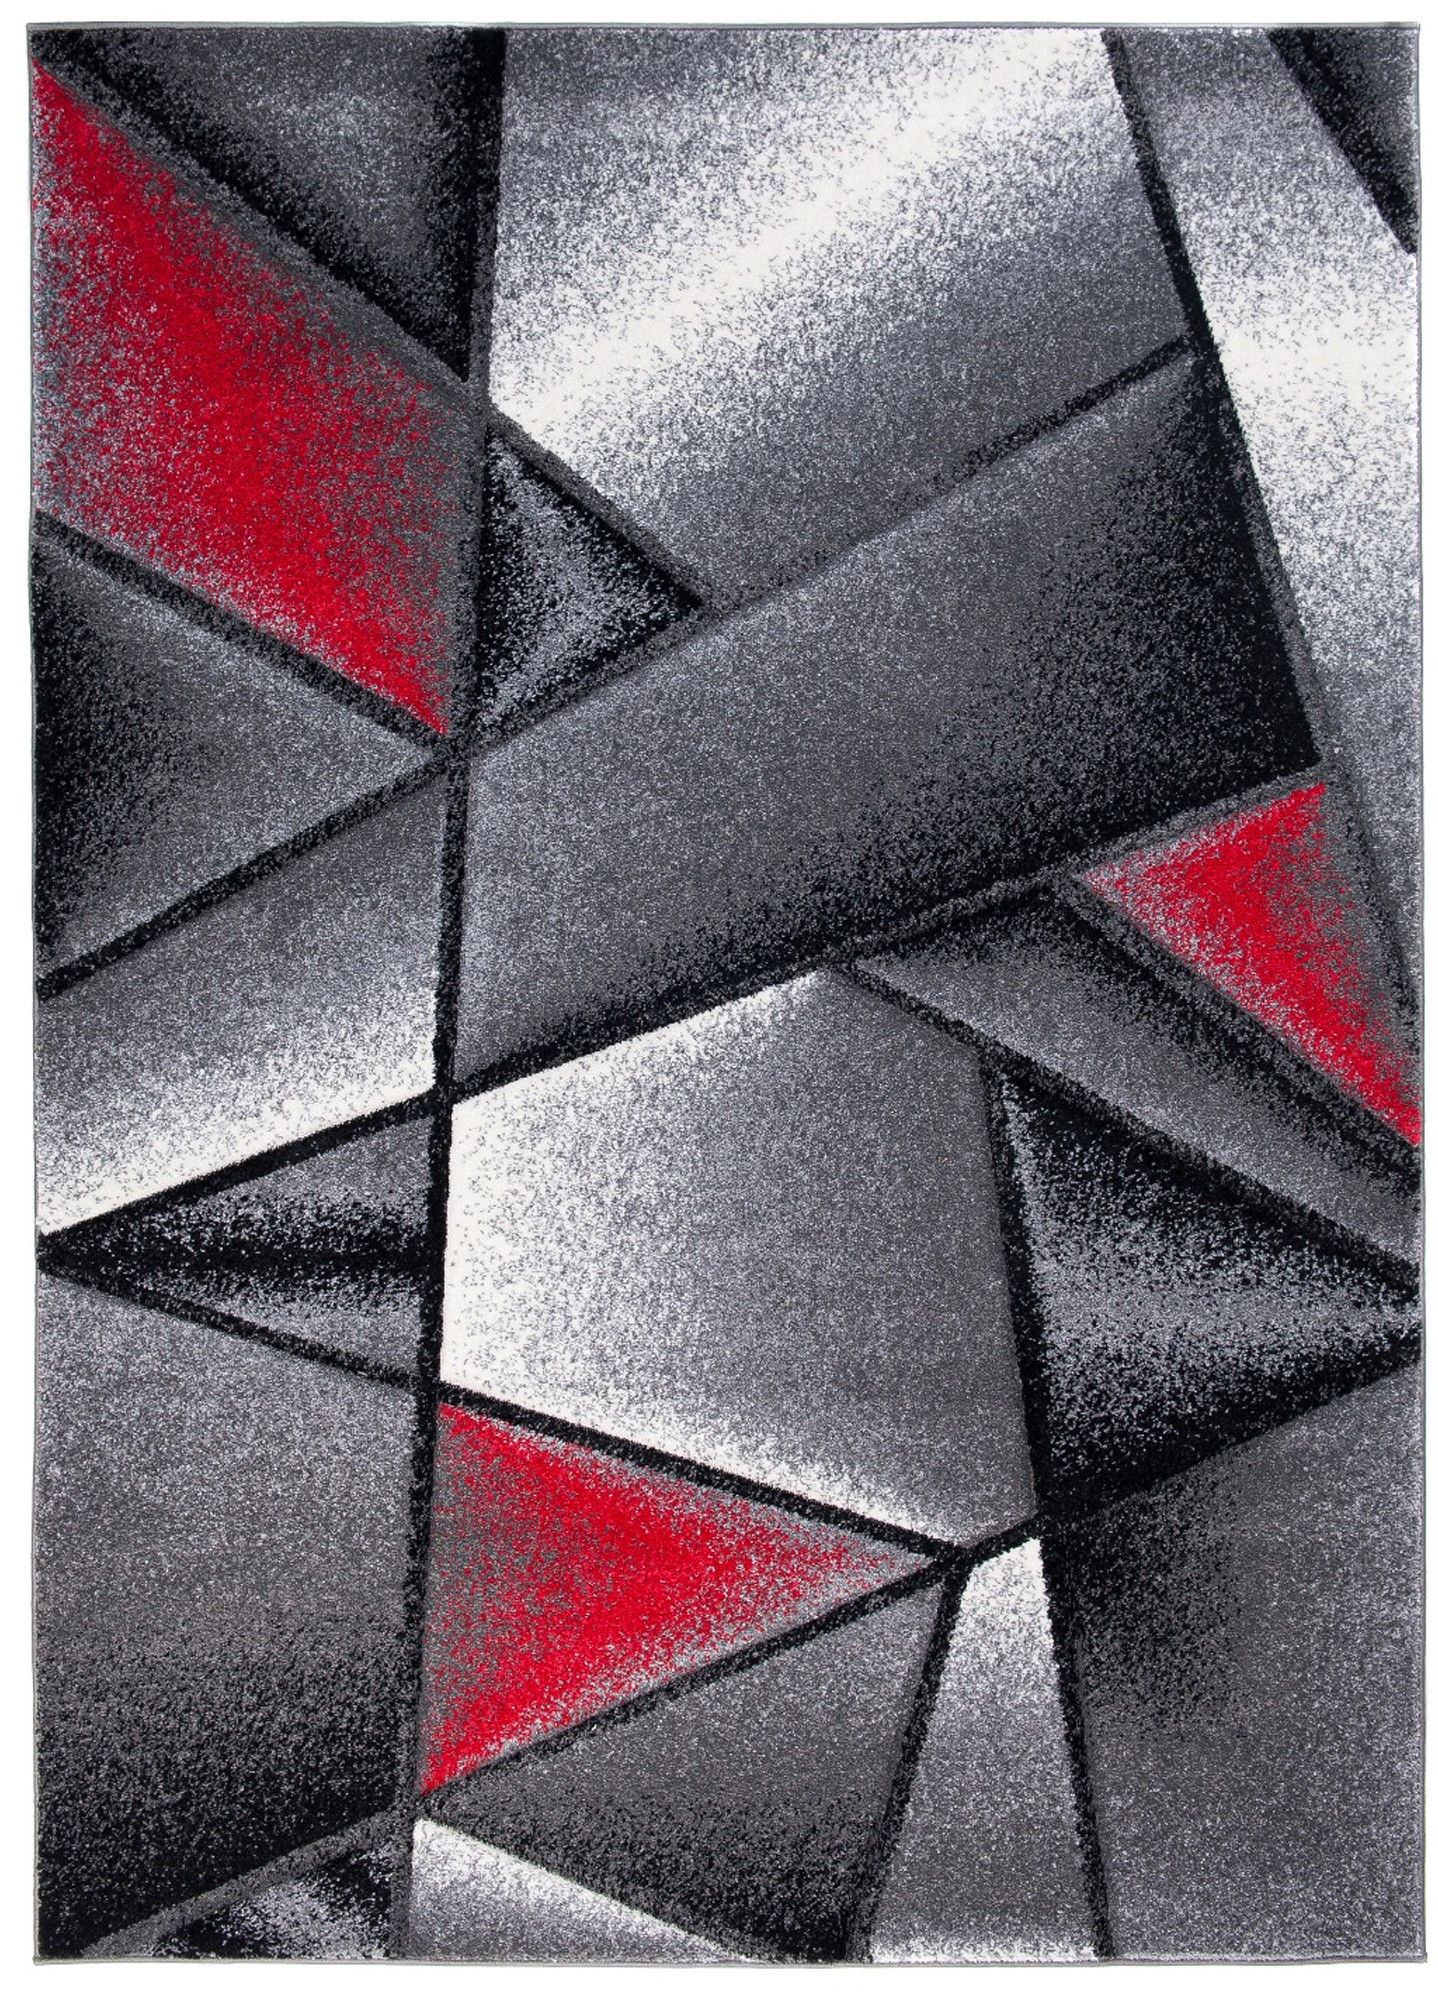 Koberec Sumatra J374C Shapes šedý, červený